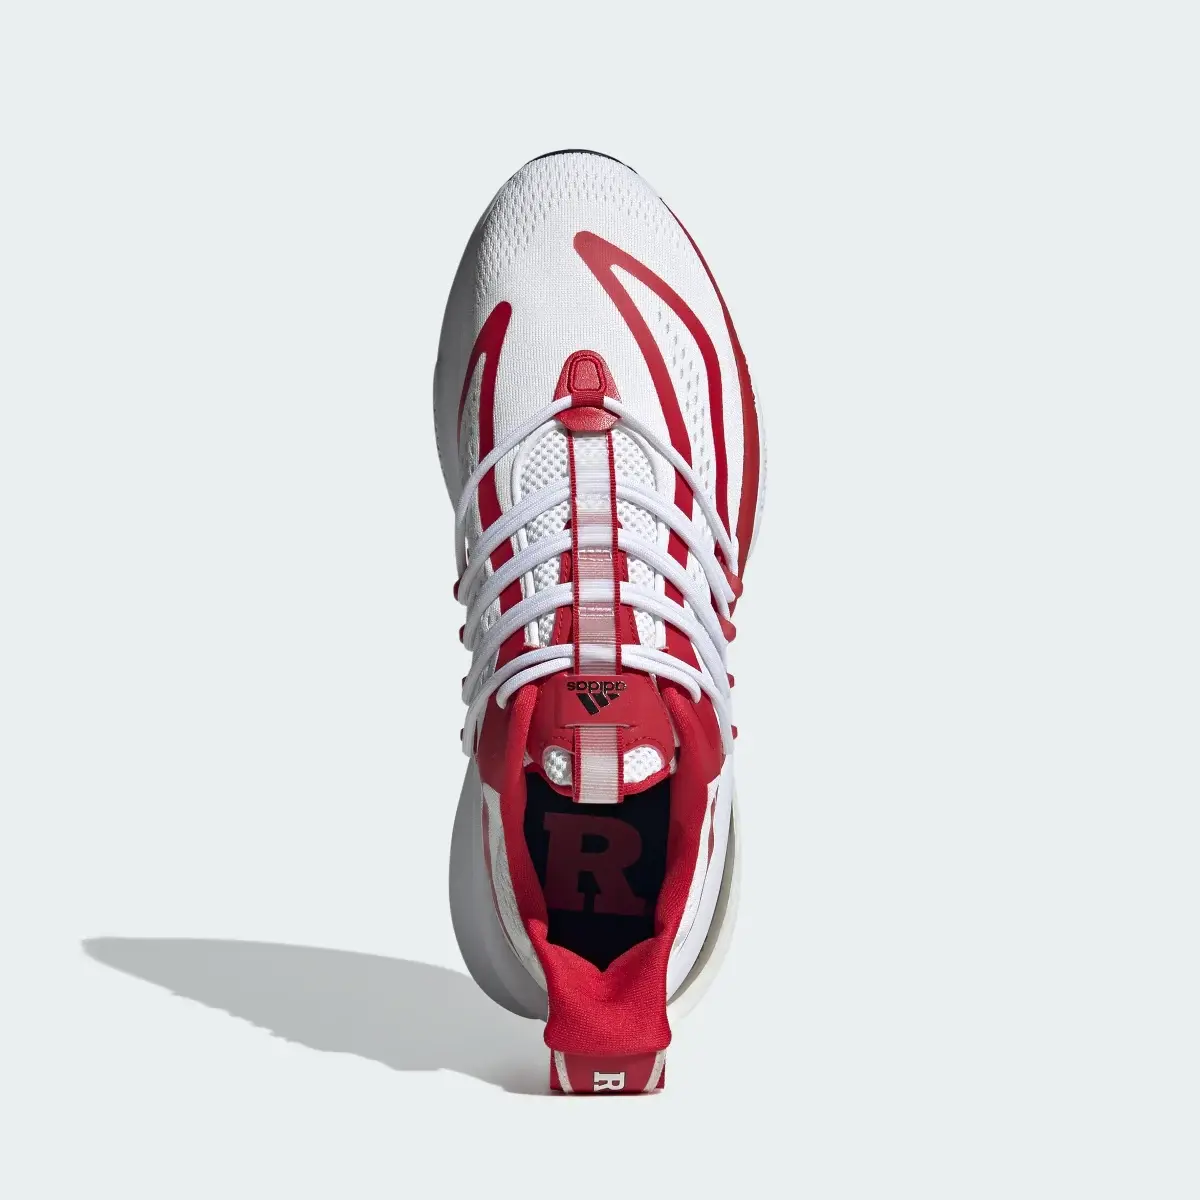 Adidas Rutgers Alphaboost V1 Shoes. 3